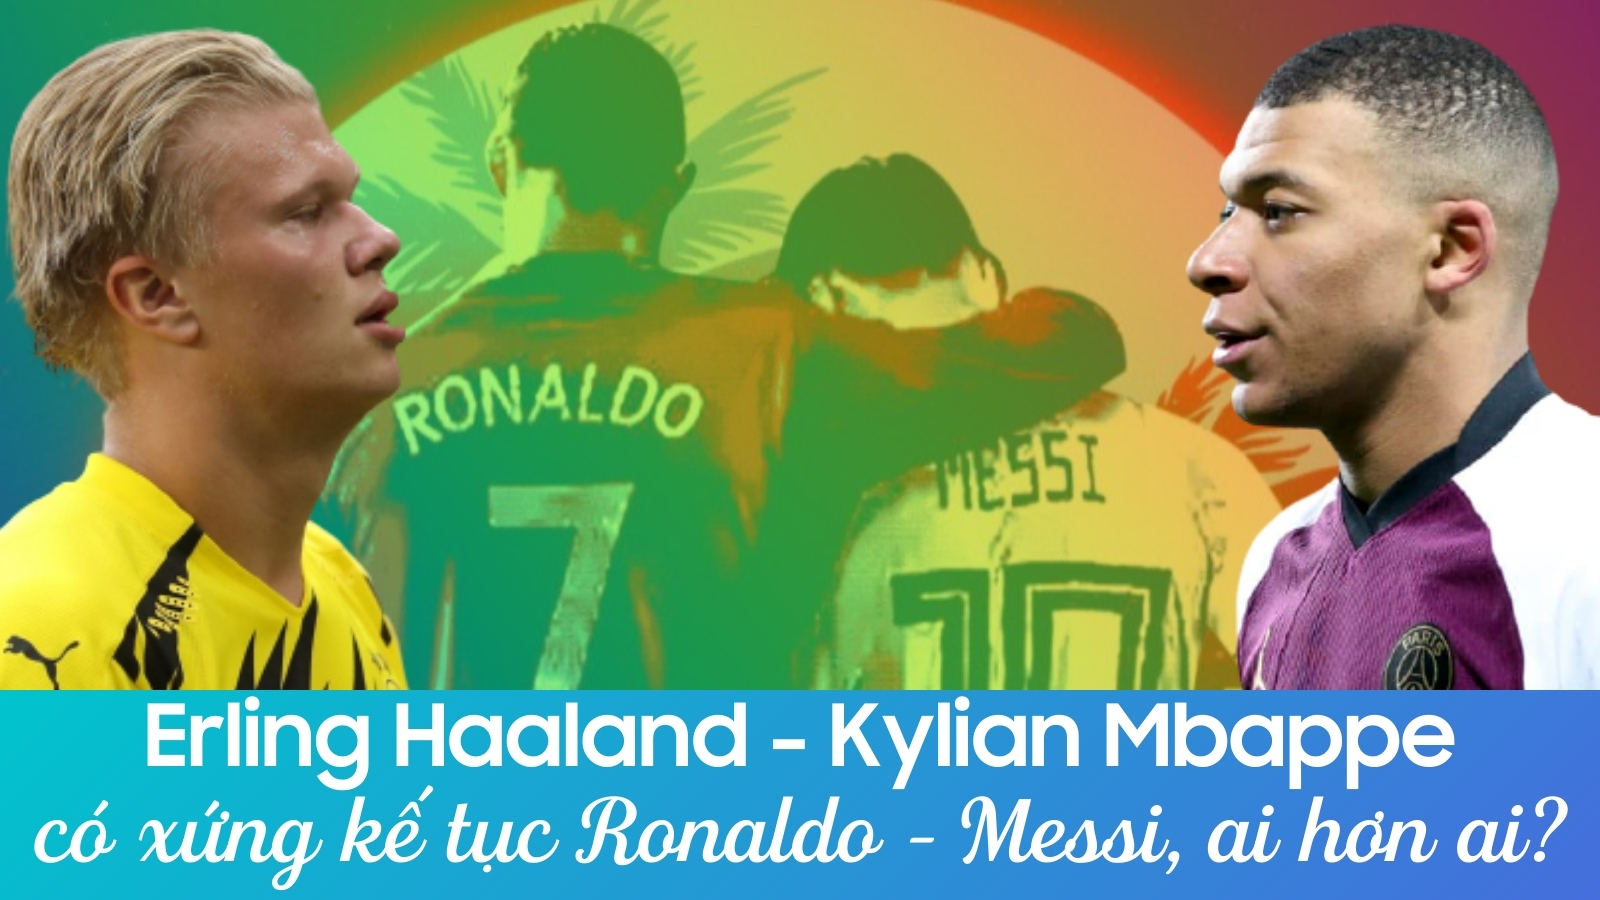 Erling Haaland - Kylian Mbappe có xứng kế tục Ronaldo - Messi, ai hơn ai? - 1